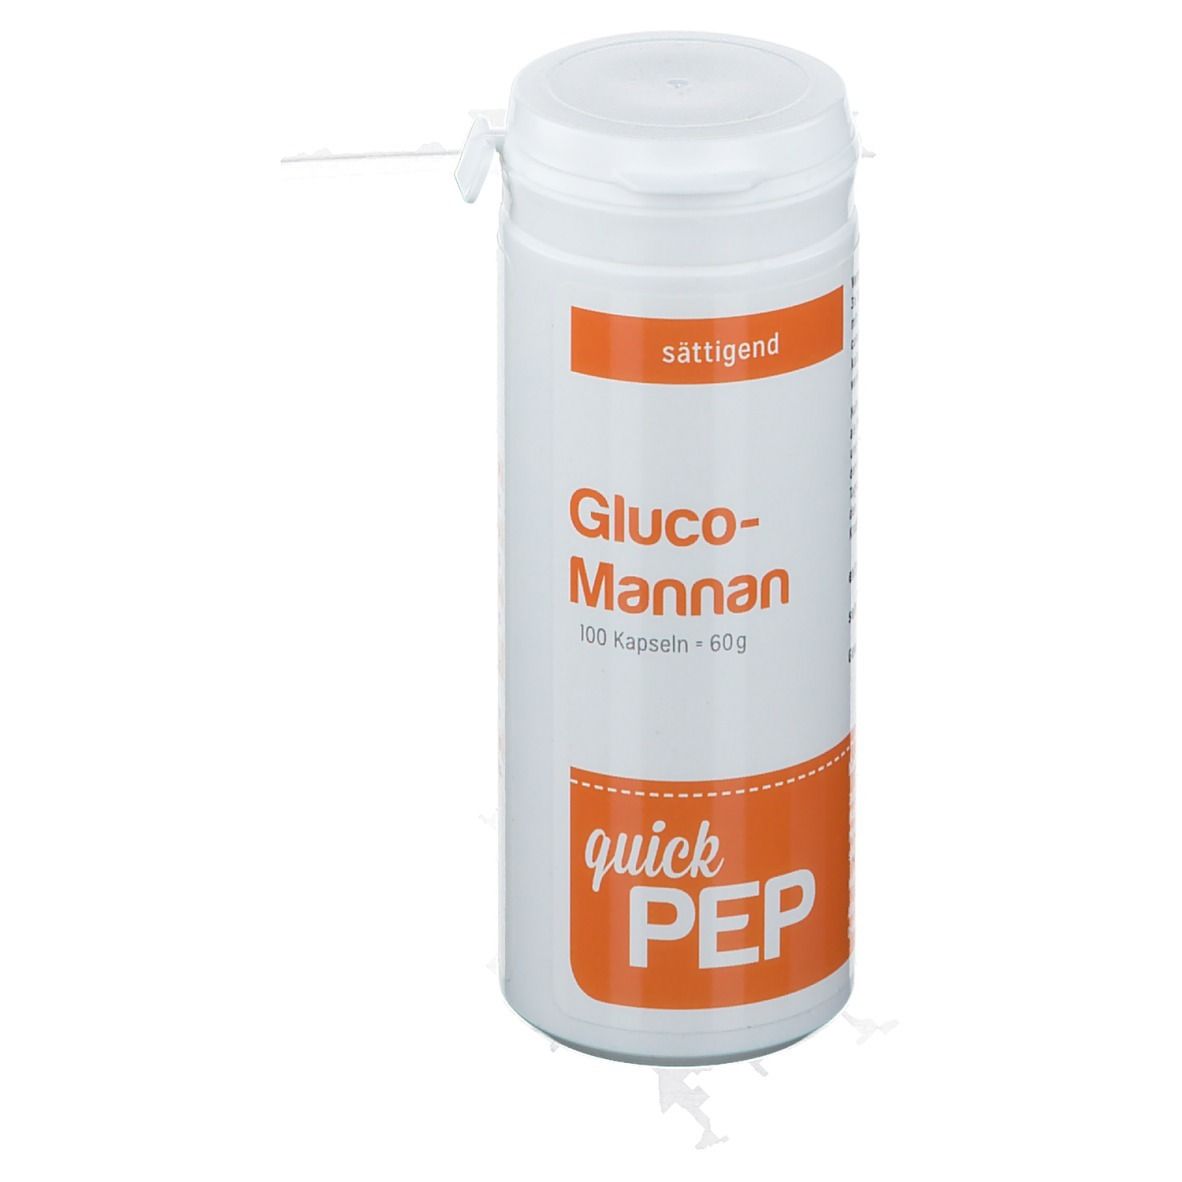 quickPEP Gluco-Mannan